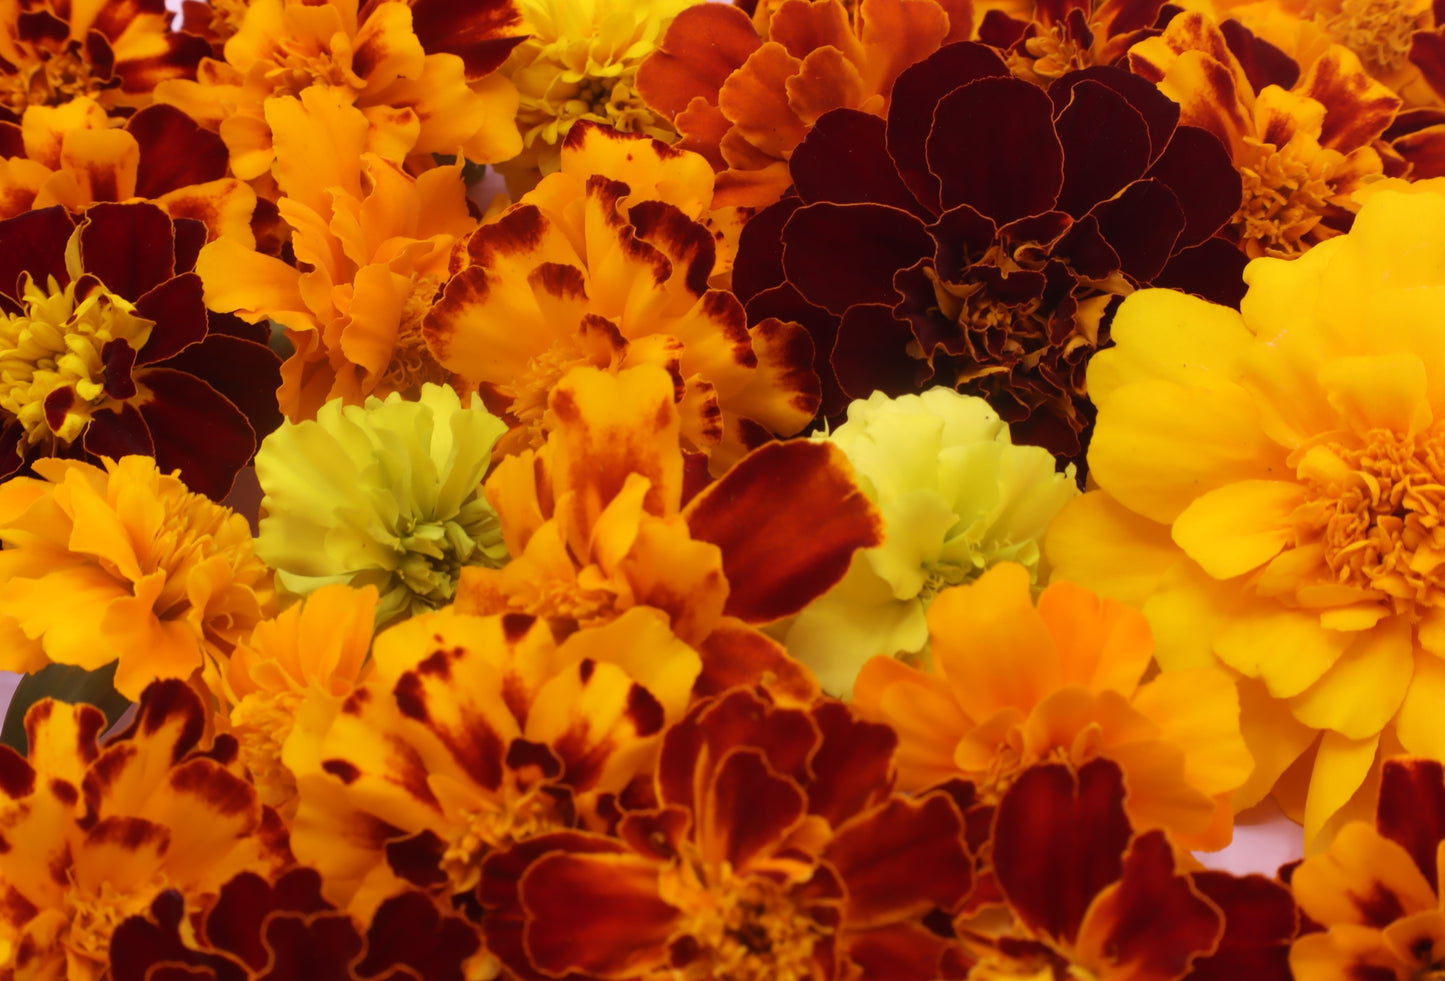 Eetbare Tagetes, Marigold, Afrikaantje, eetbare bloemen, eetbare bloemenshop, floral delight